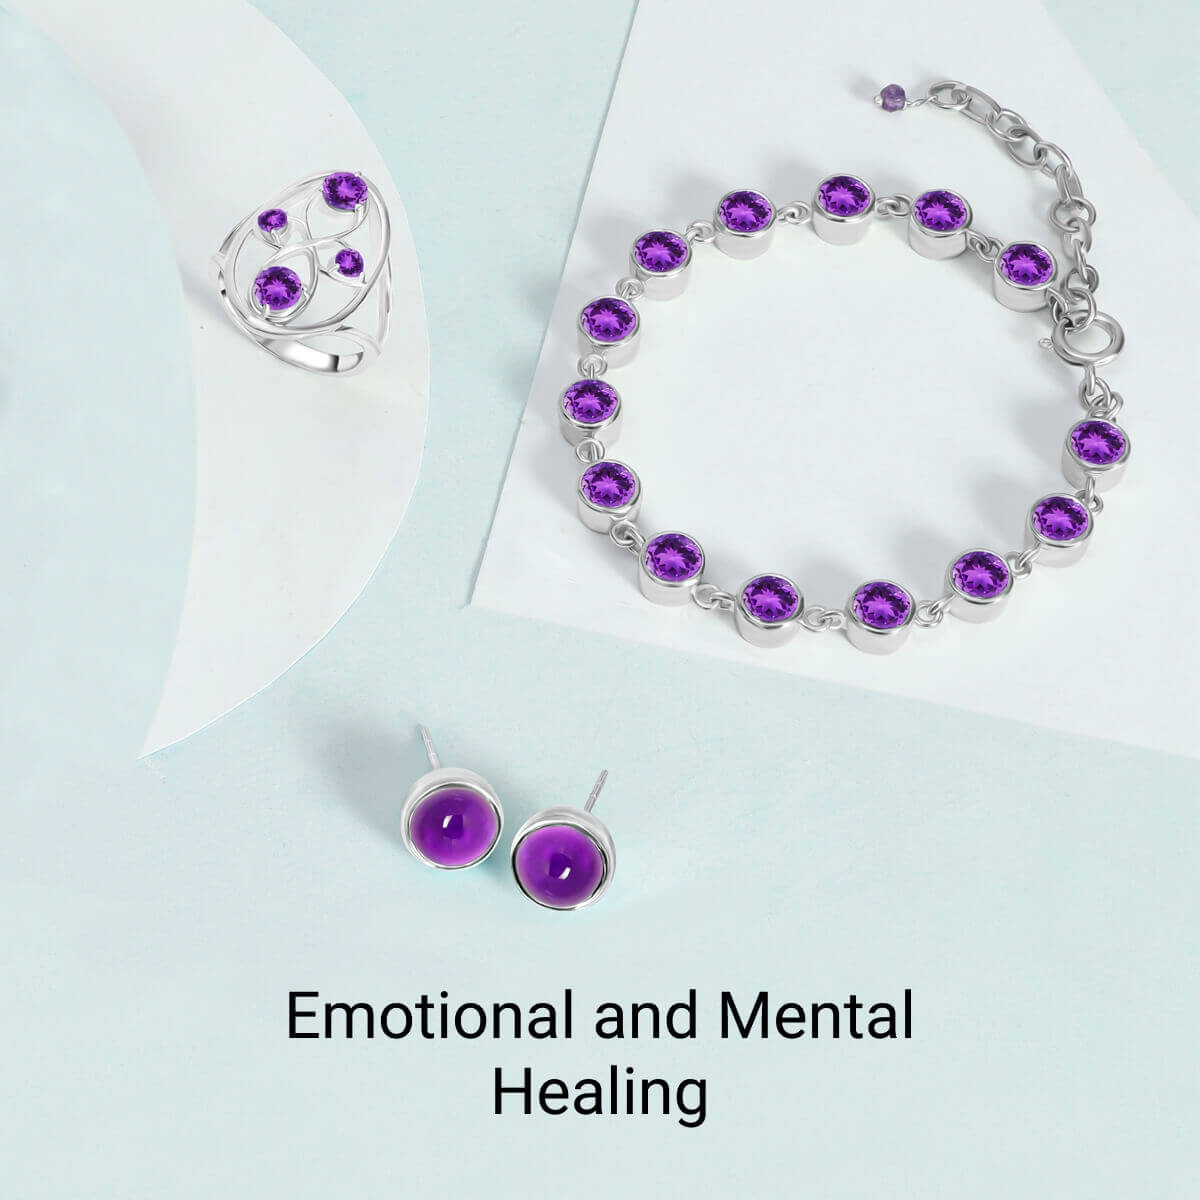 Emotional and mental healing properties